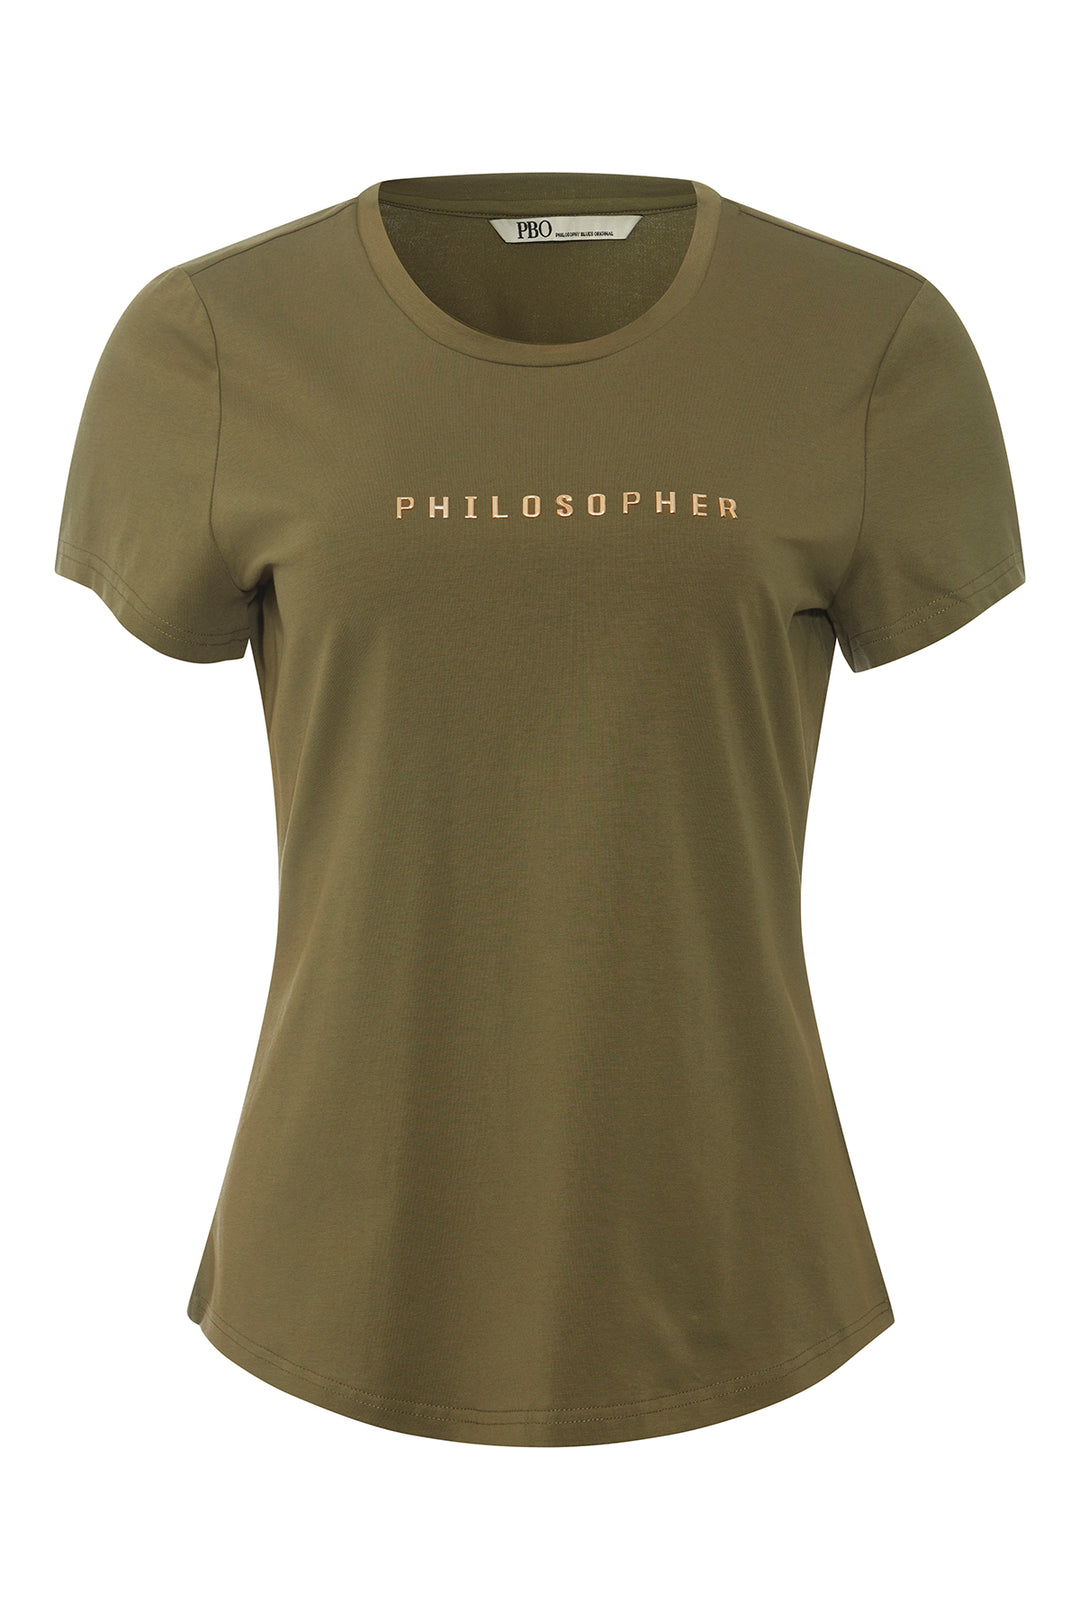 PBO Philosopher T-shirt T-SHIRTS 516 Burnt olive